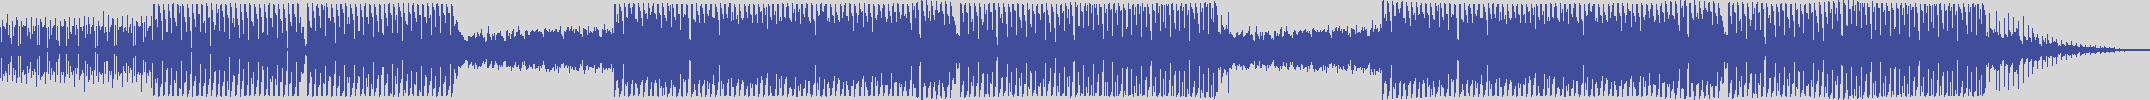 atomic_recordings [AR003] Tech Boy - Play That Rhythms [T Element Mix] audio wave form